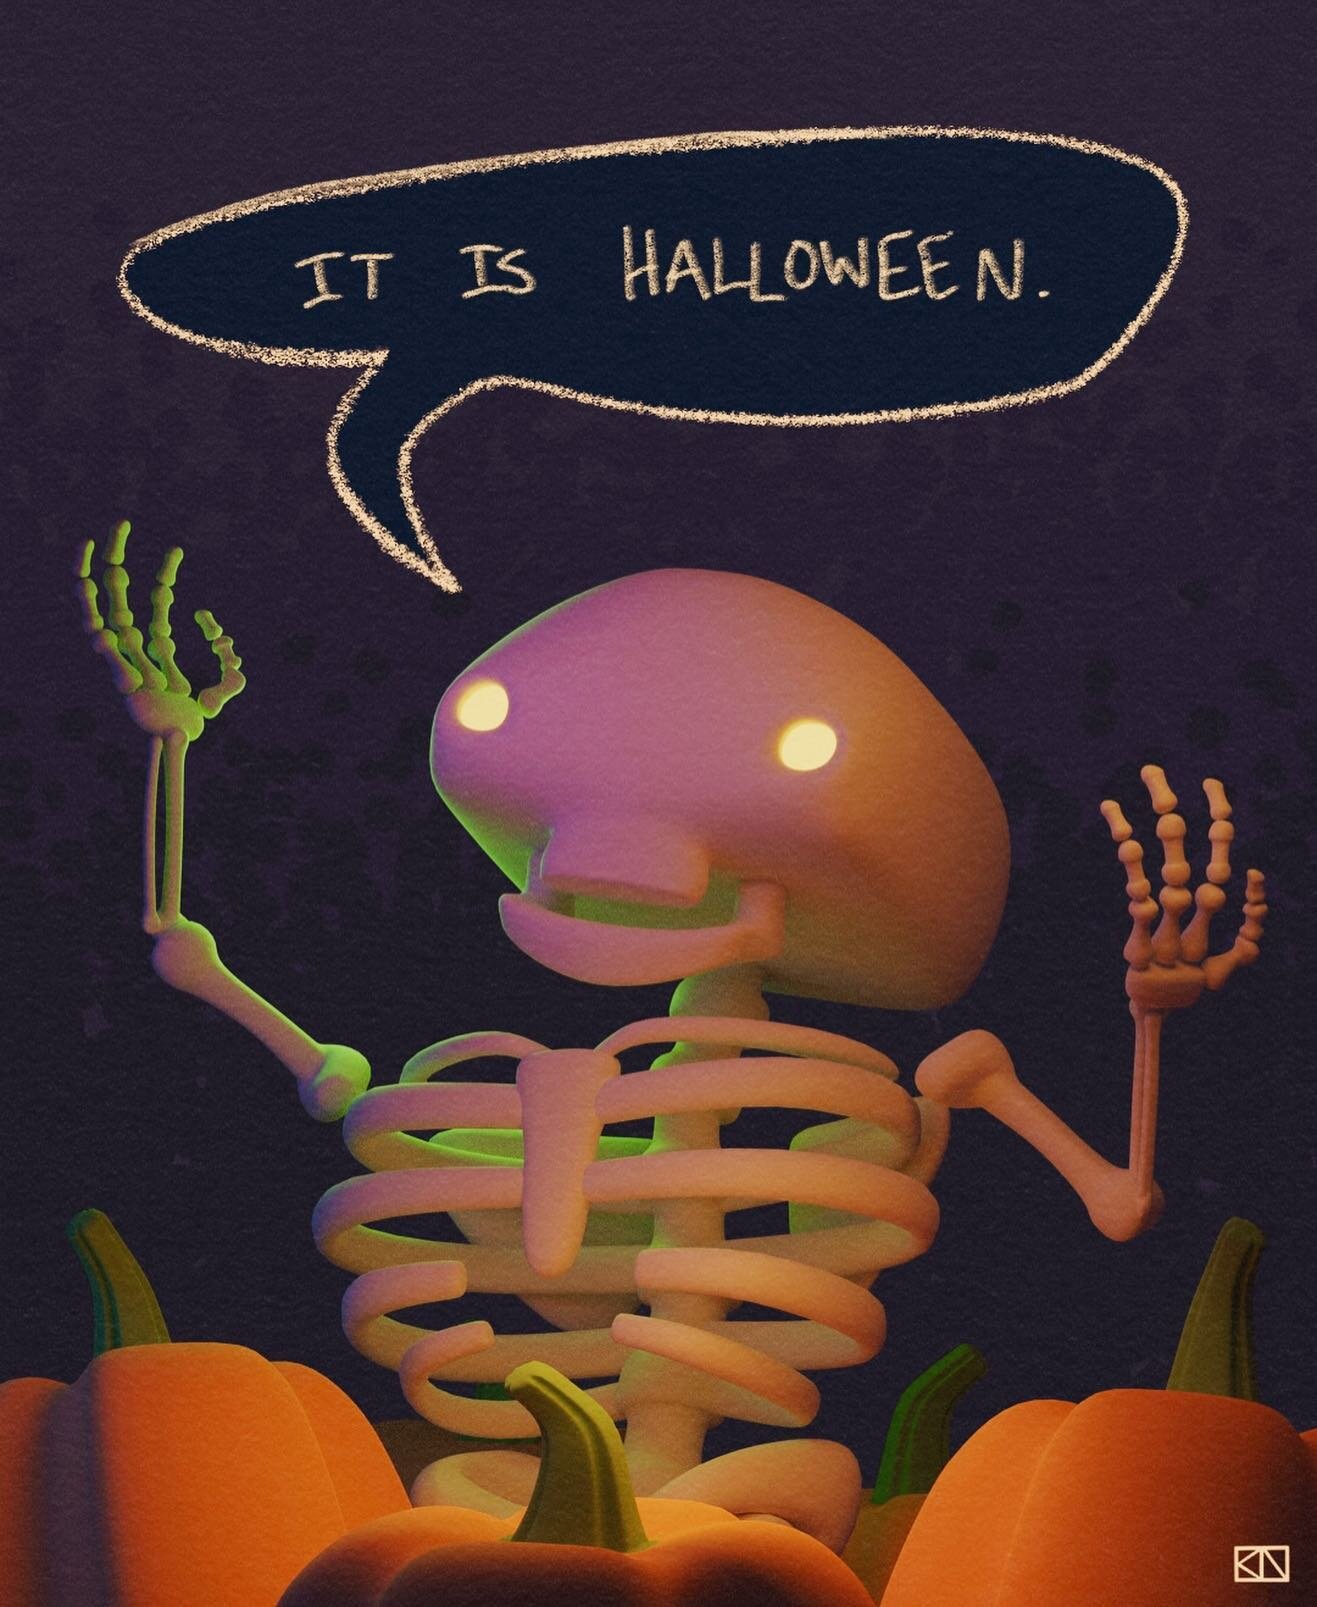 It is. 🎃

#3dmodeling #3dmodel #blender #blender3D #3Dart #3Dartist #halloween #halloween2021 #spookyseason #spooky #skeleton #pumpkins #skeleton #trickortreat #3dcharacter #spook #halloweenart